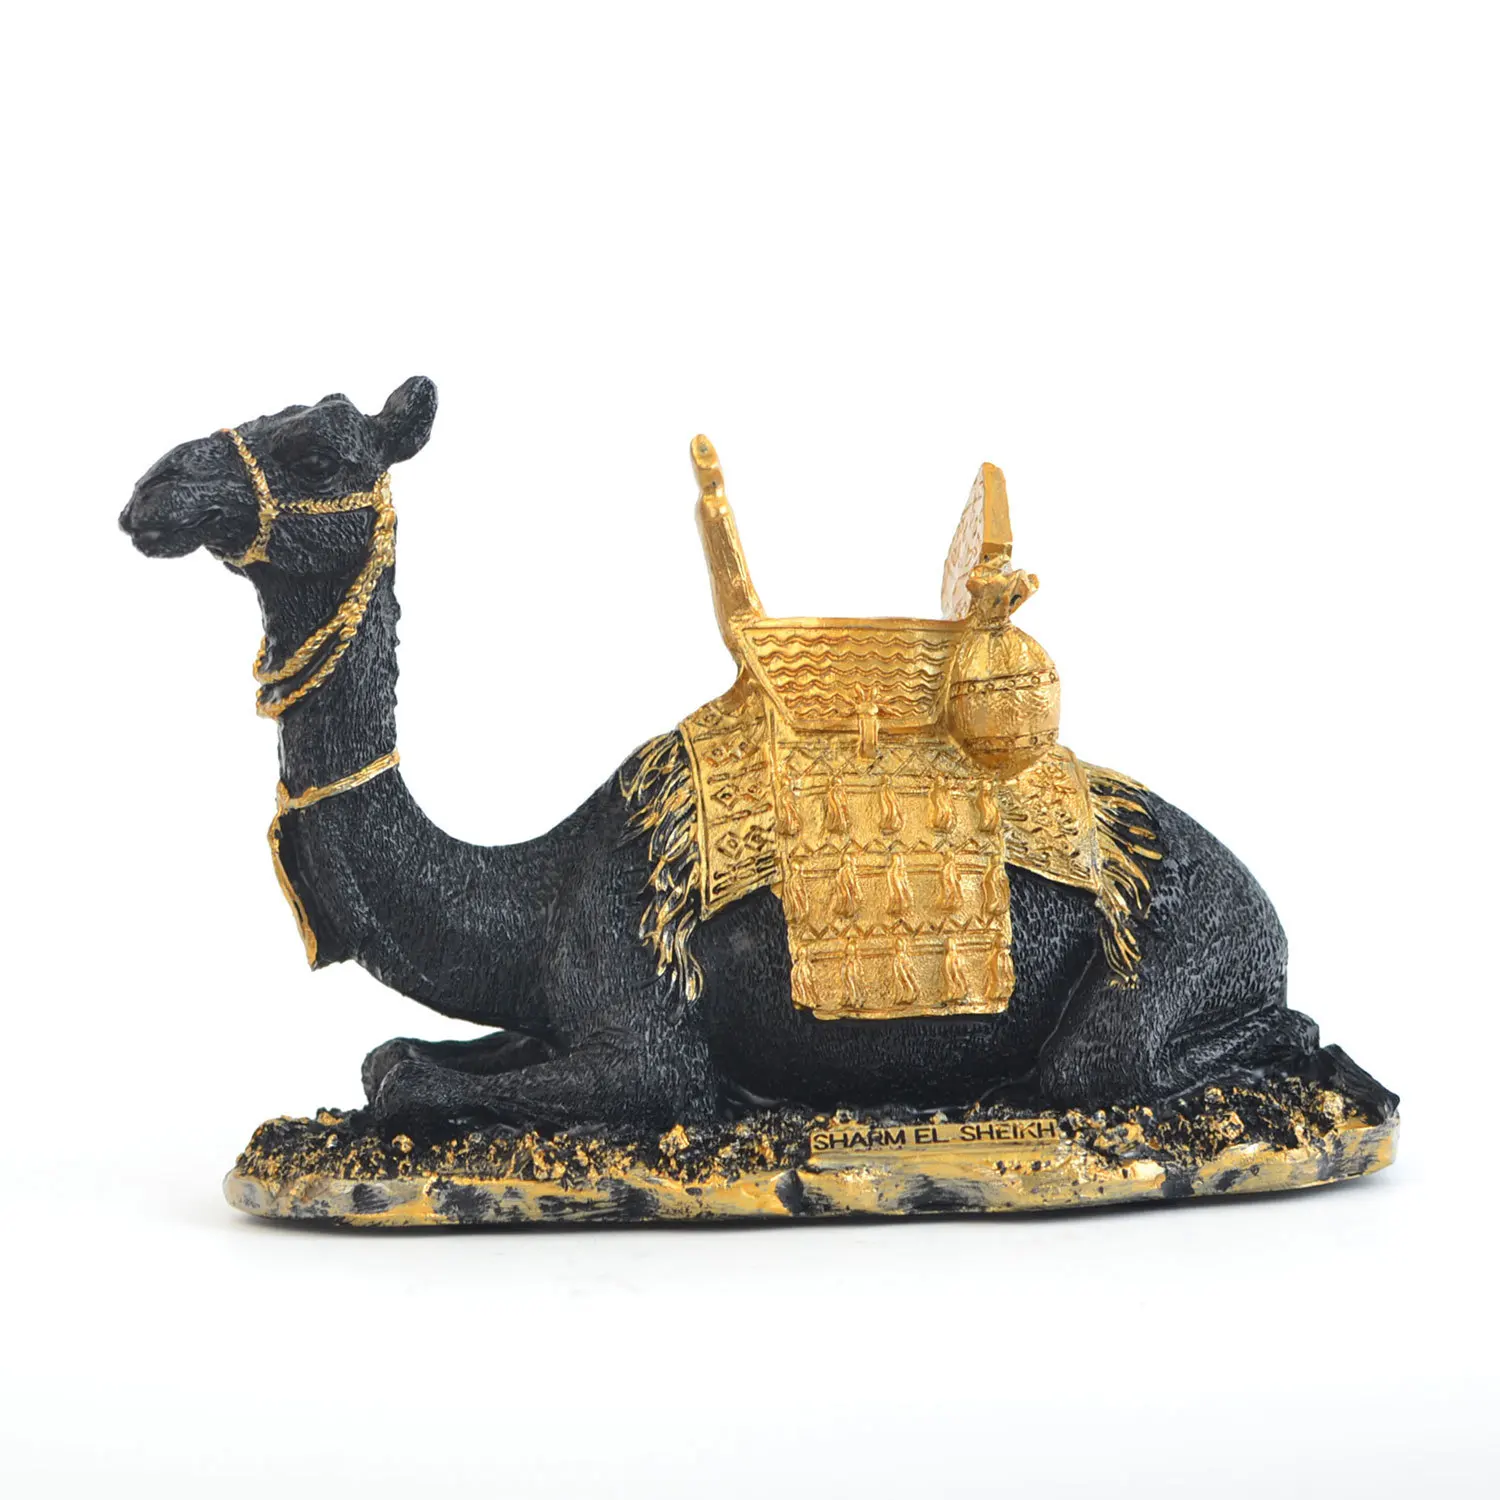 Dubai resin crafts Egypt ornaments UAE Qatar tourist souvenirs desert camel decoration